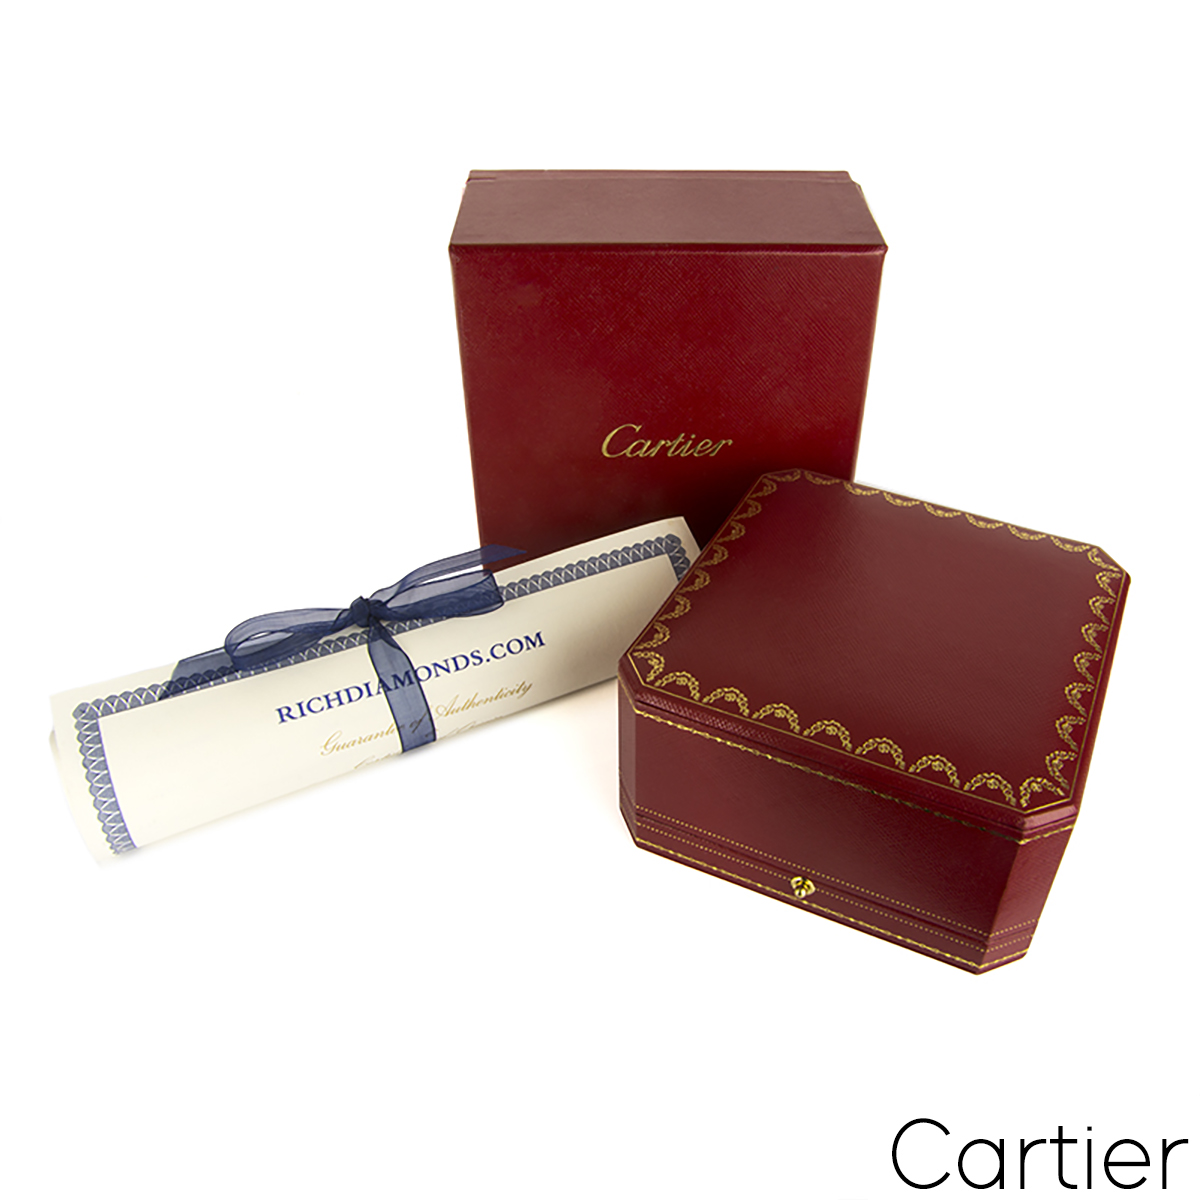 Cartier Rose Gold Coloured Stones Love Bracelet Size 17 B6036517